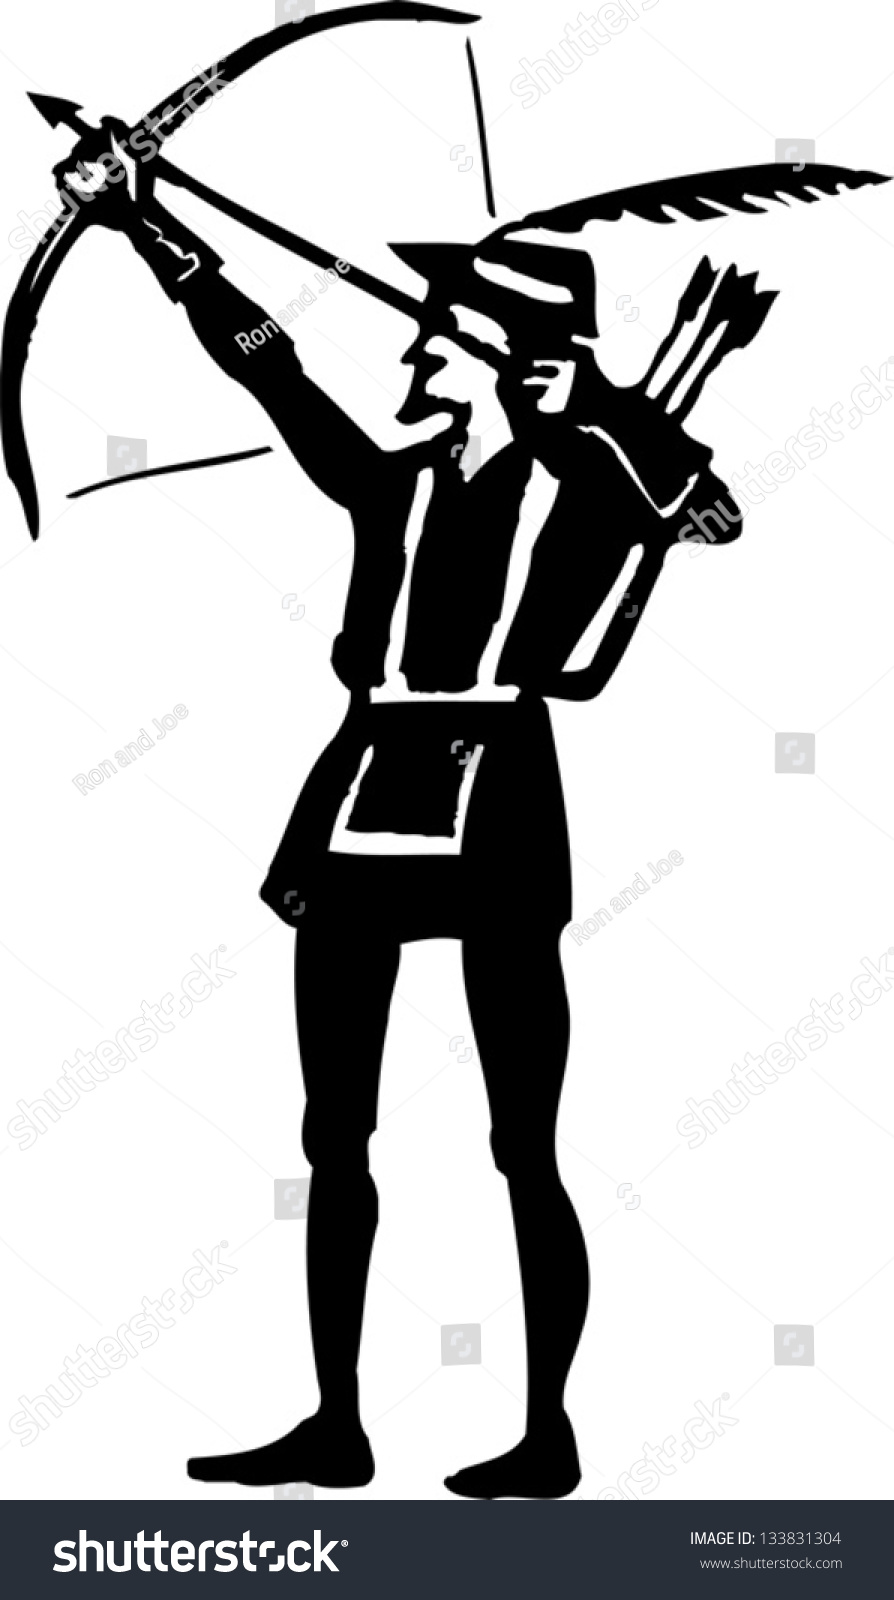 Black And White Vector Illustration Of Robin Hood Shooting An Arrow